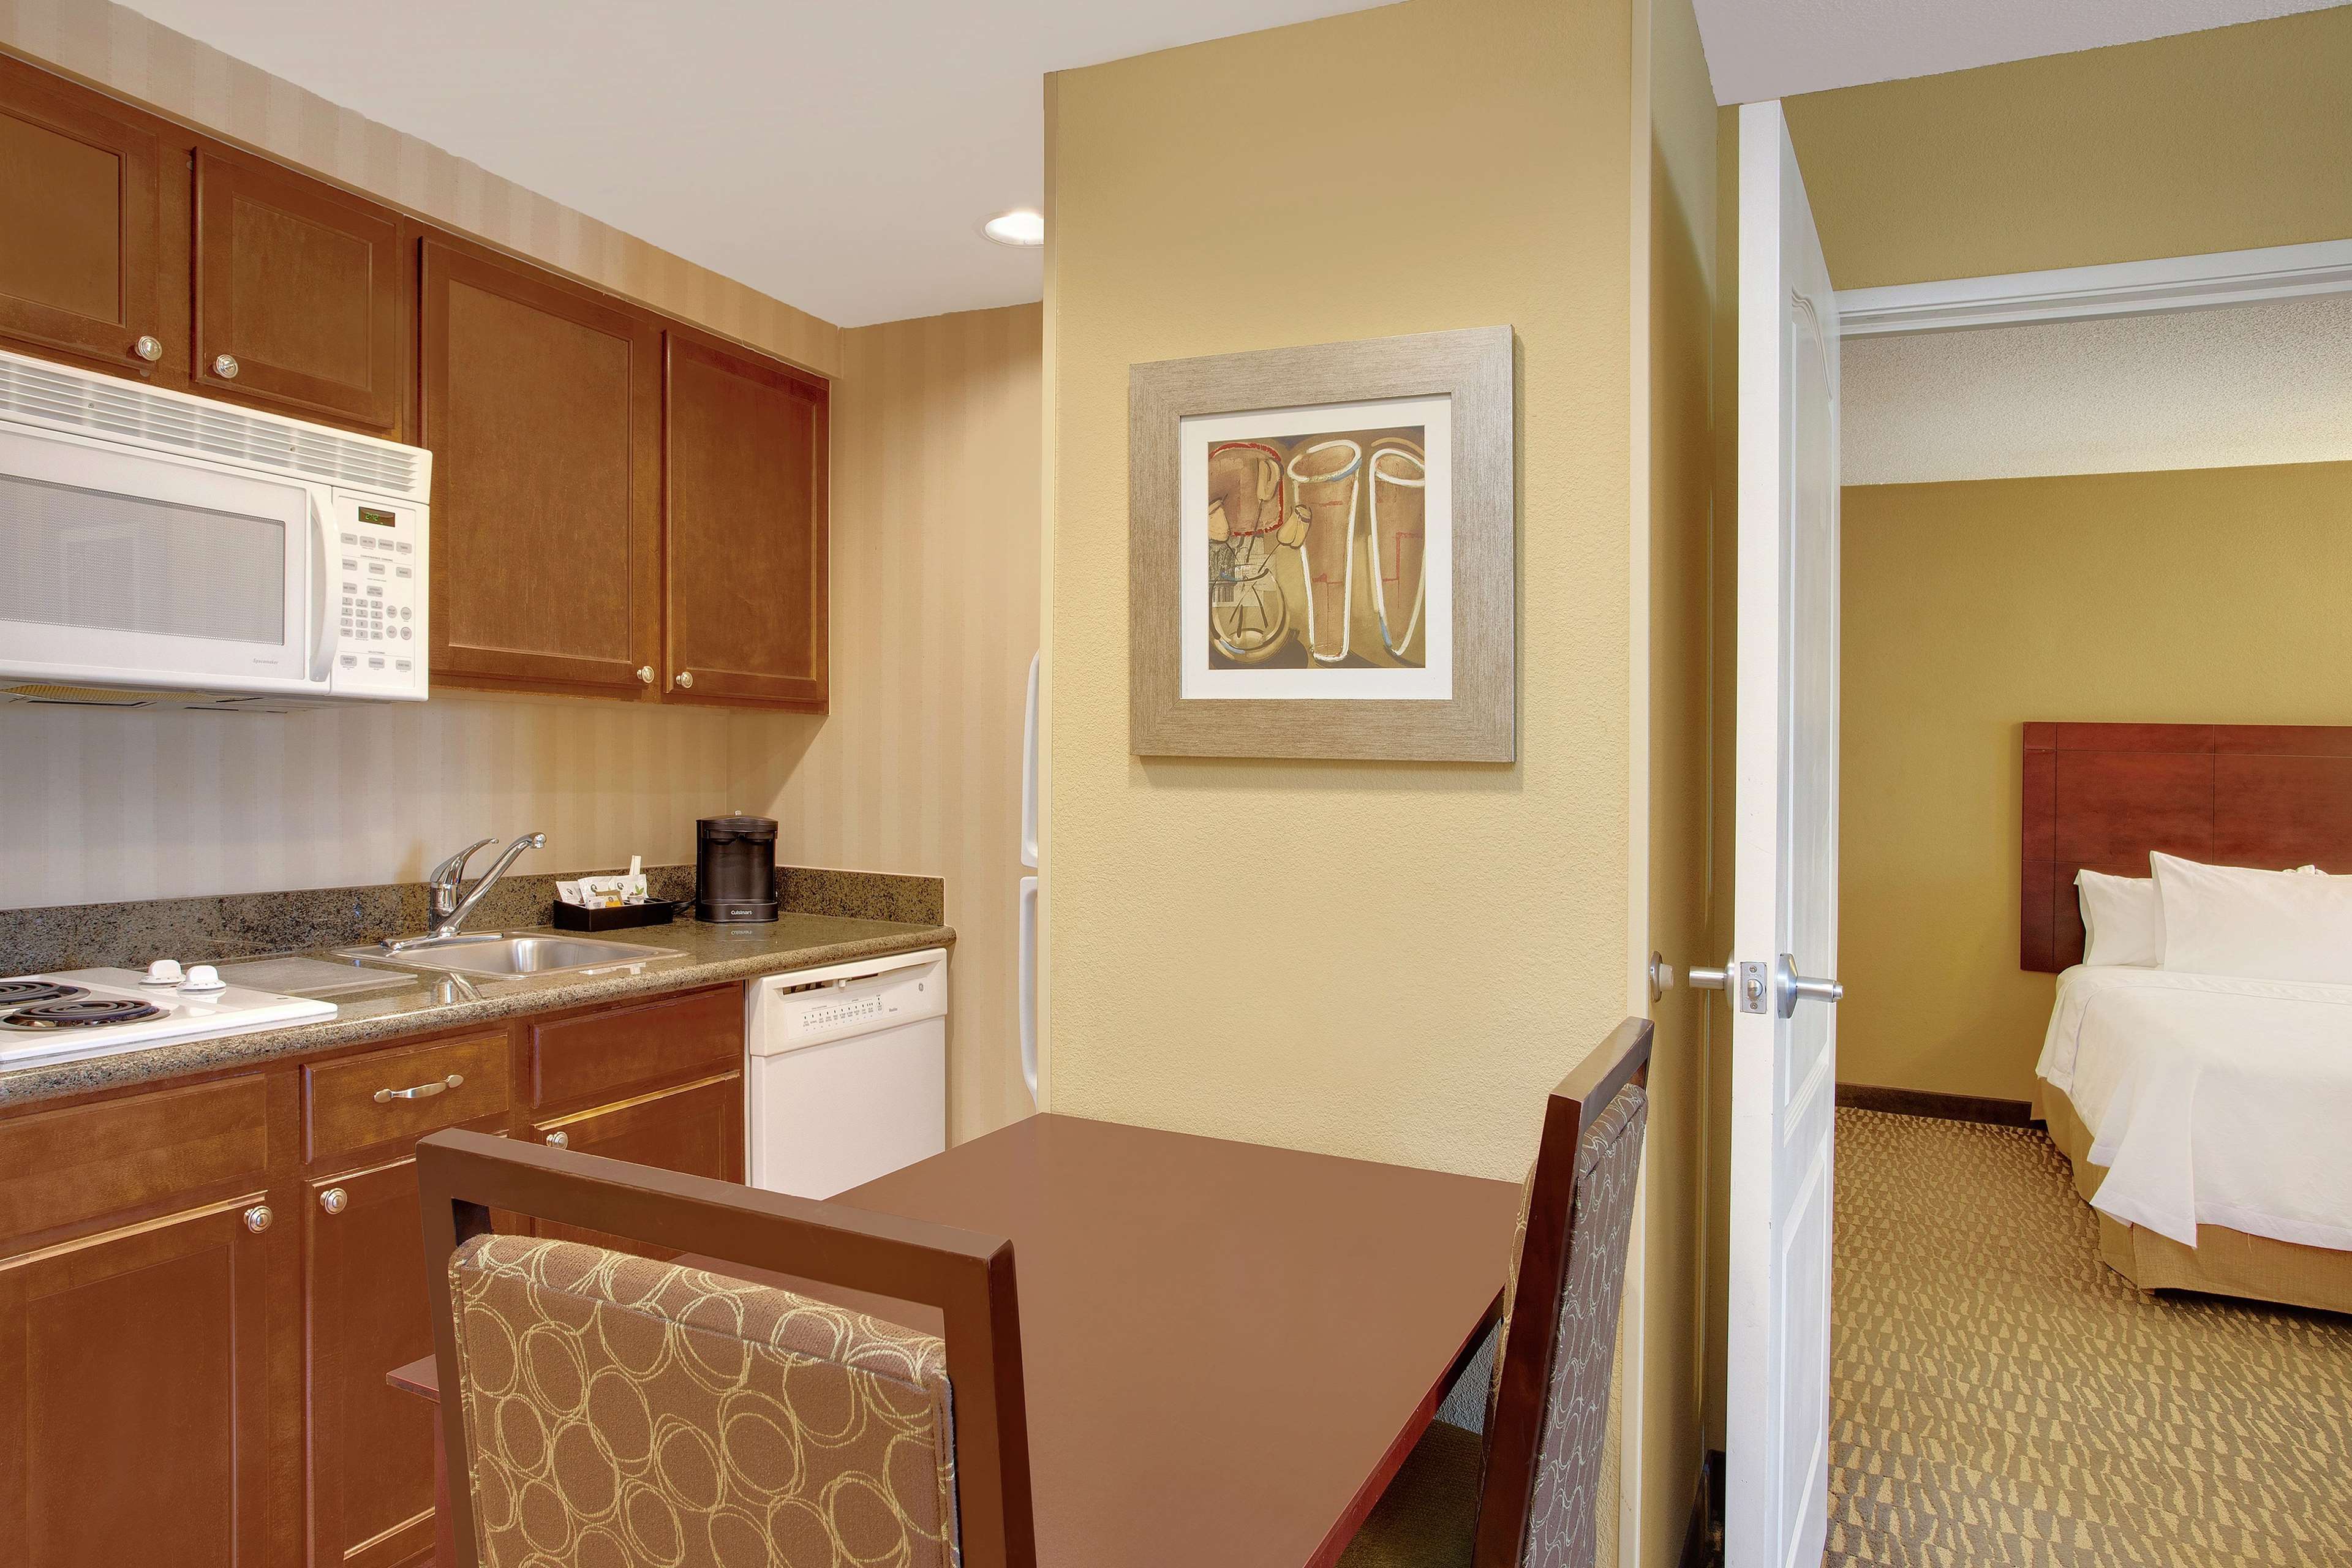 Homewood Suites by Hilton Tampa-Brandon Photo